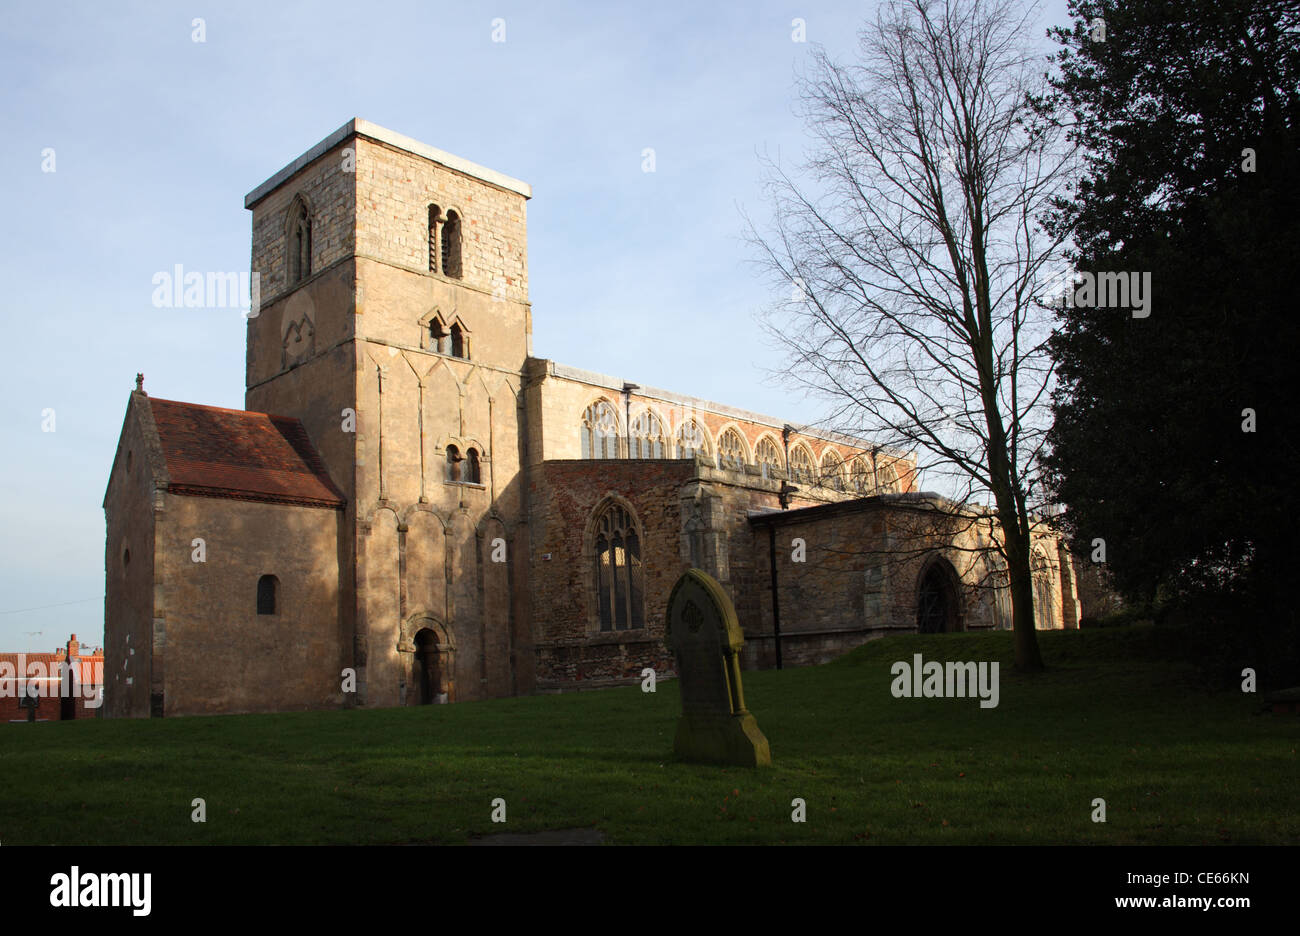 Str. Peters Kirche, Barton auf Humber, Lincolnshire, 10. Jahrhundert Turm. Stockfoto